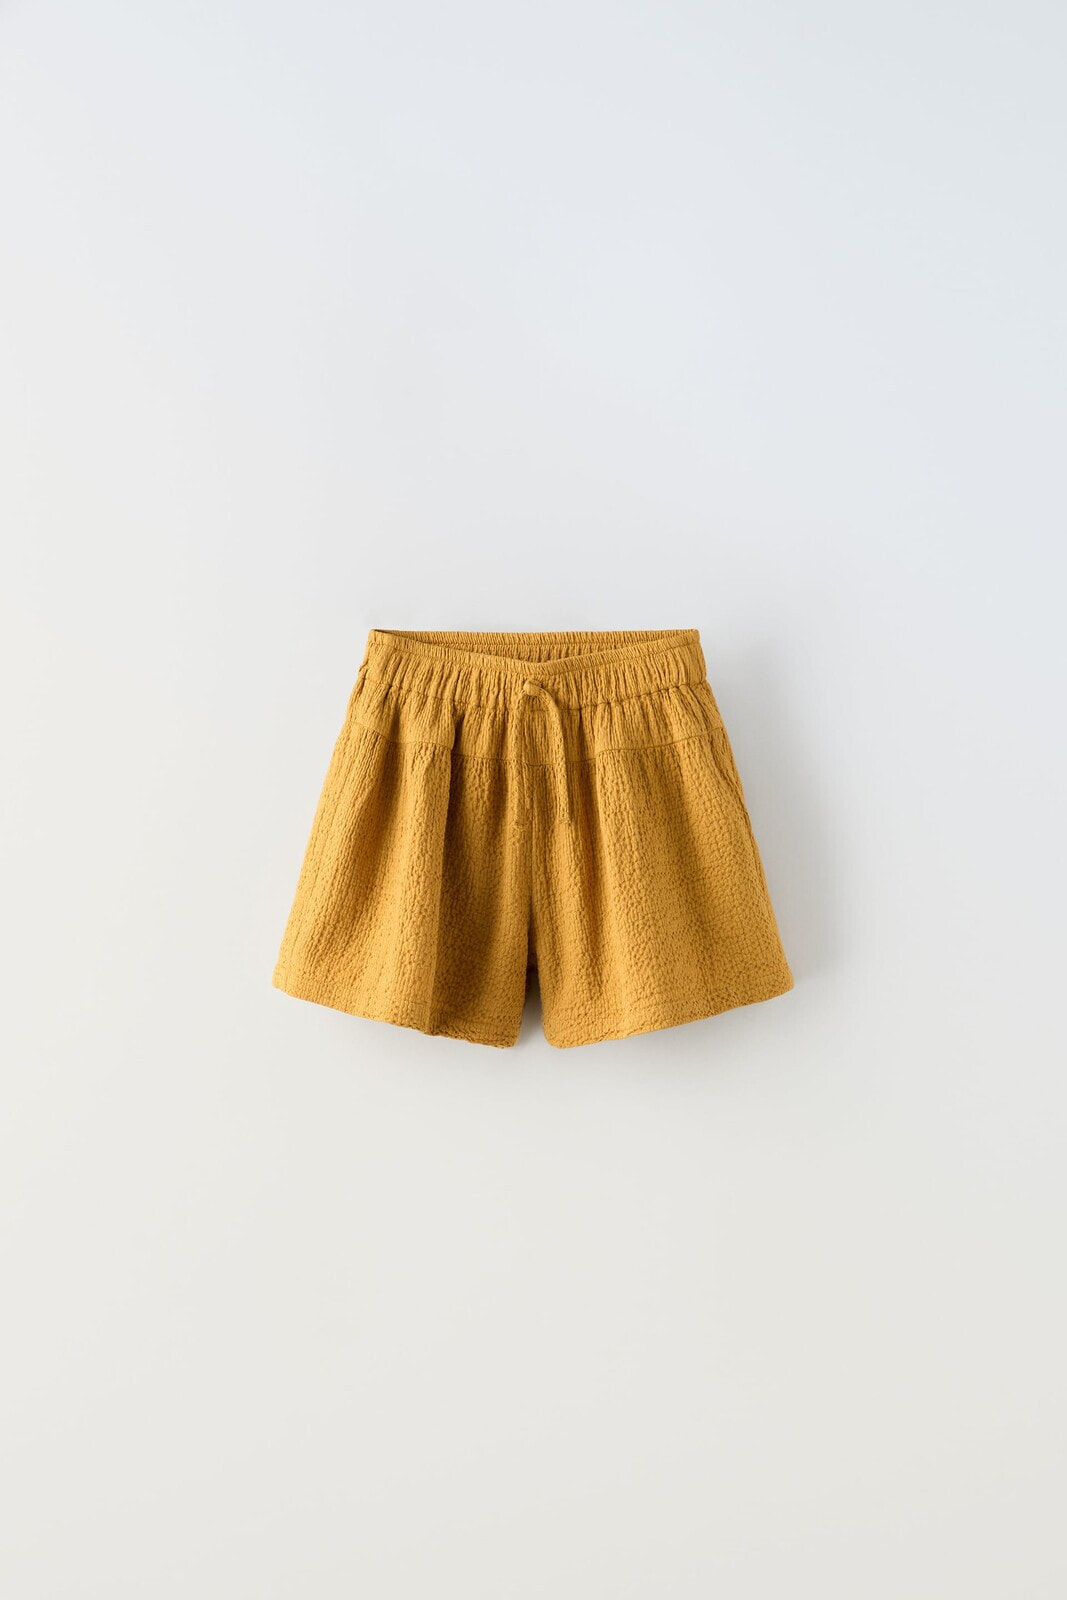 Loose-fitting textured weave bermuda shorts